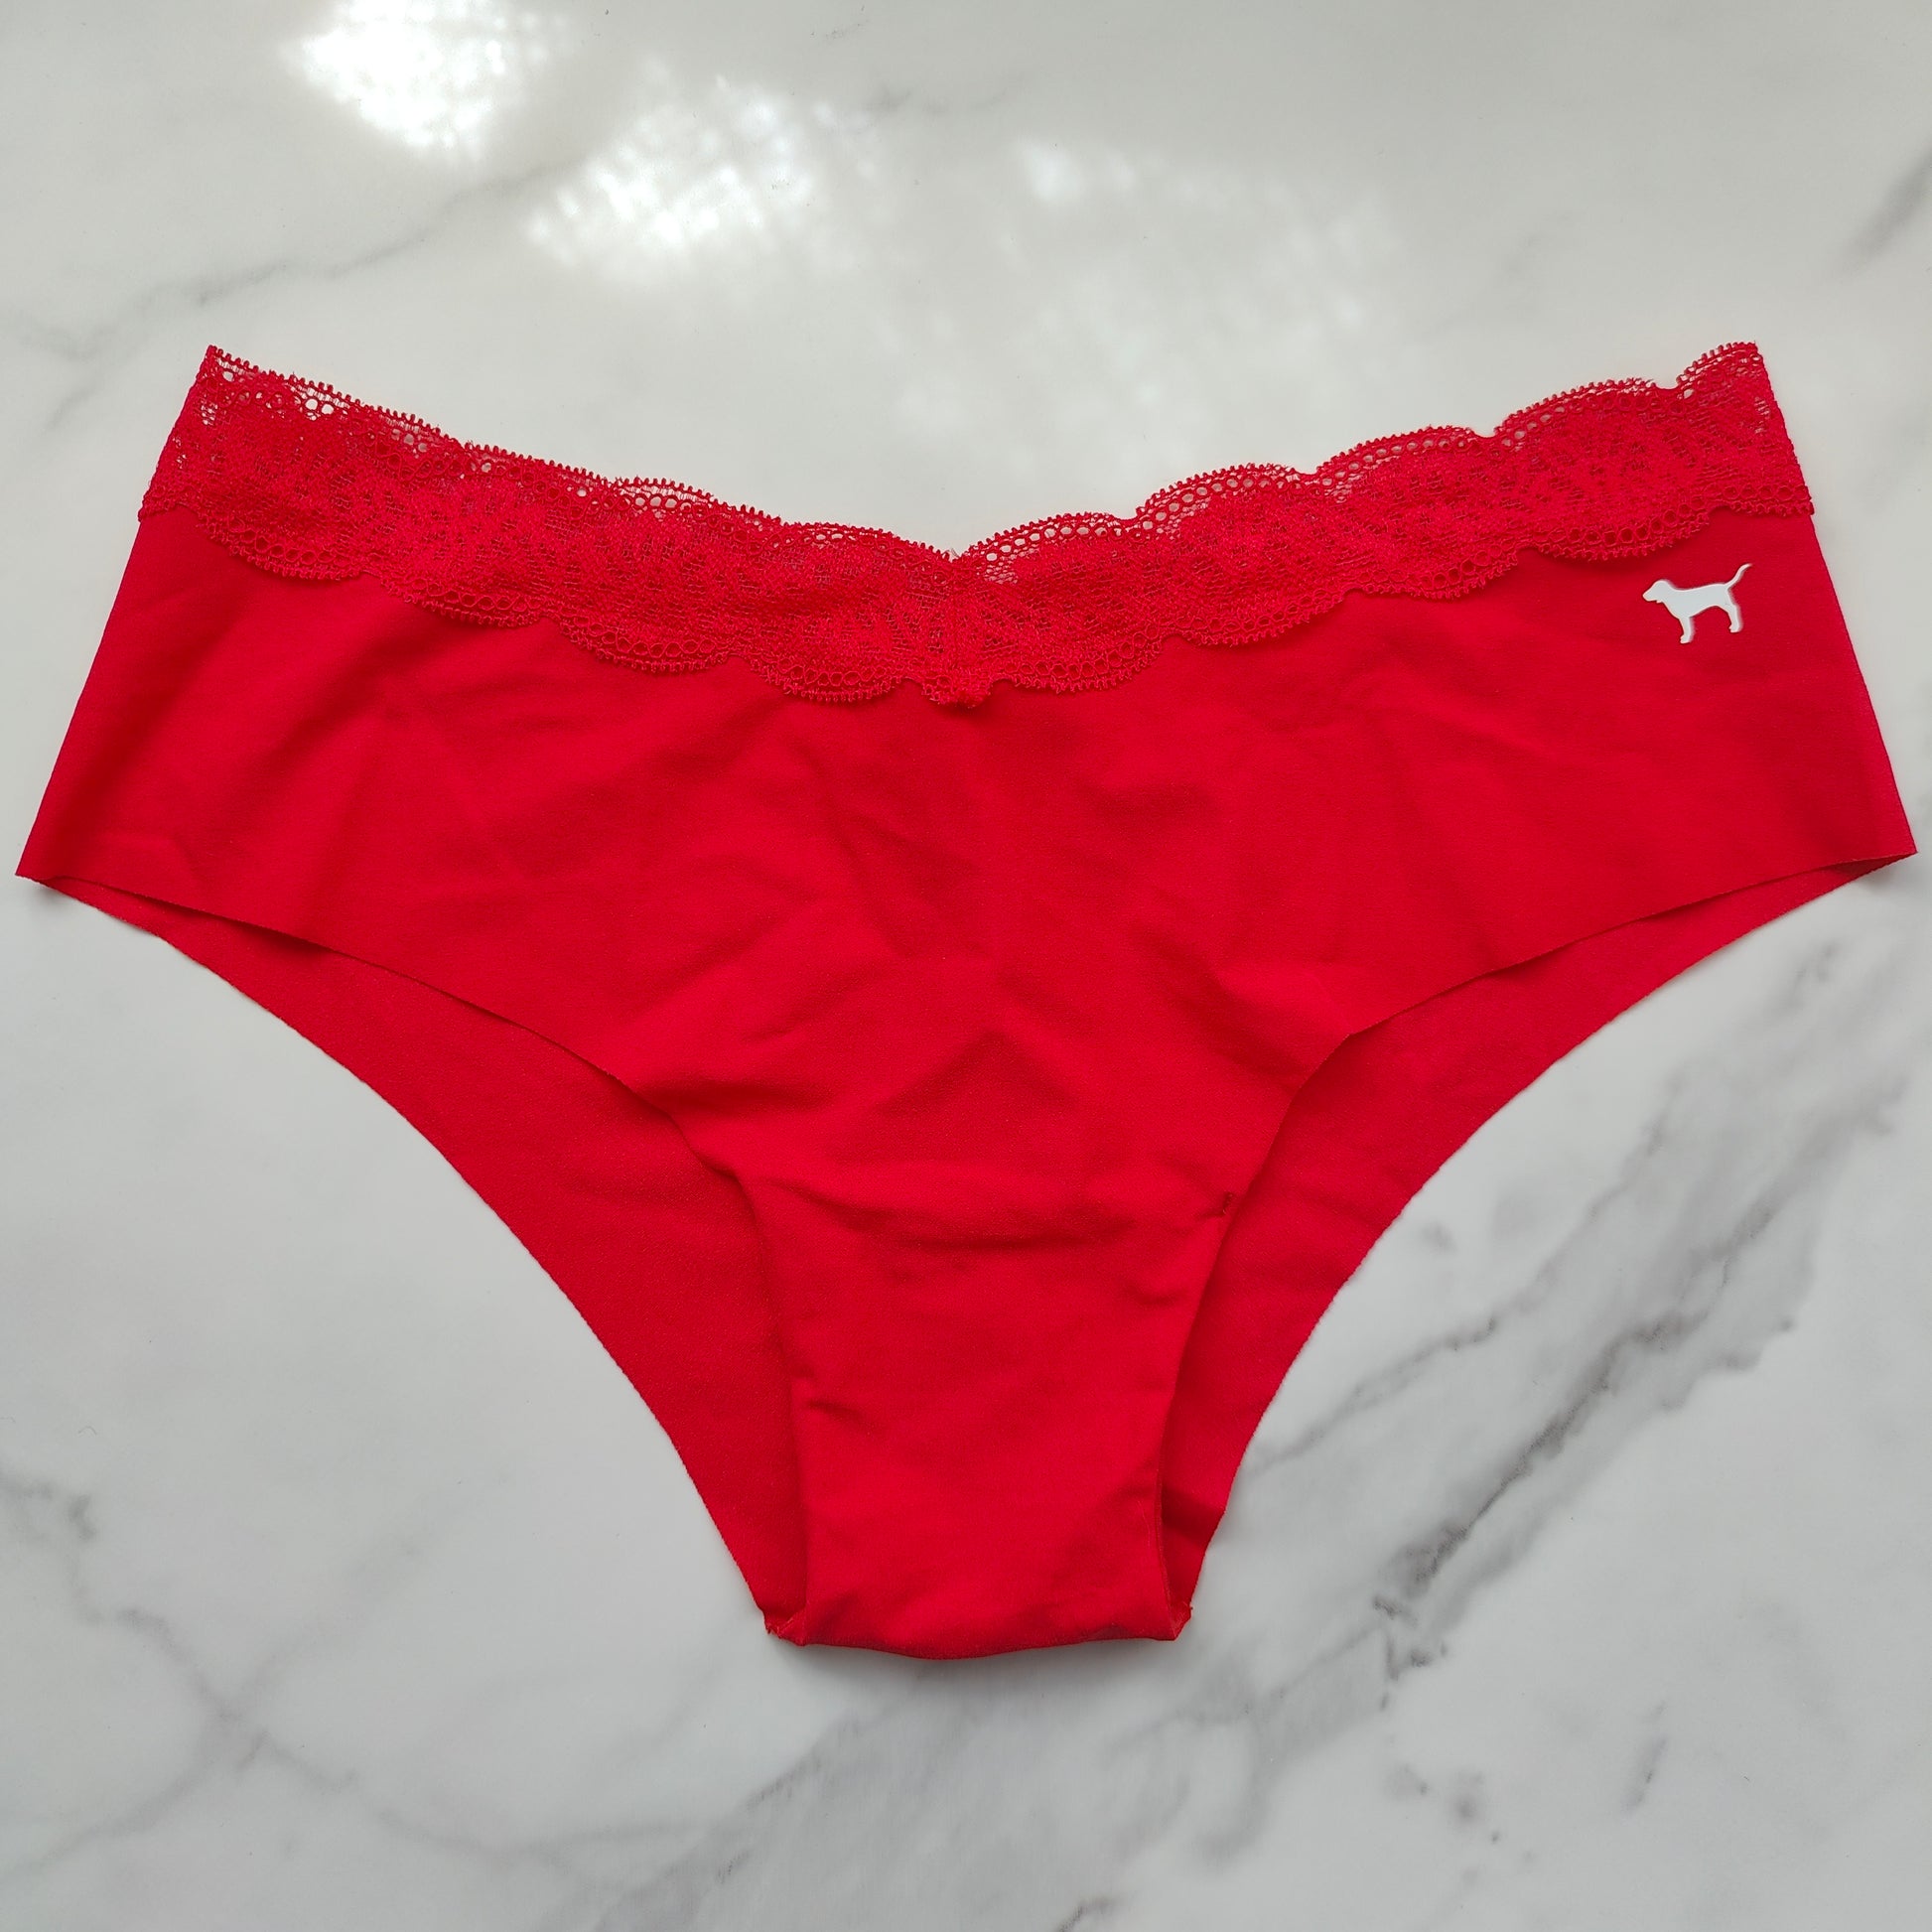 Personalize Underwear red Victoria Secret NO-SHOW CHEEKSTER with